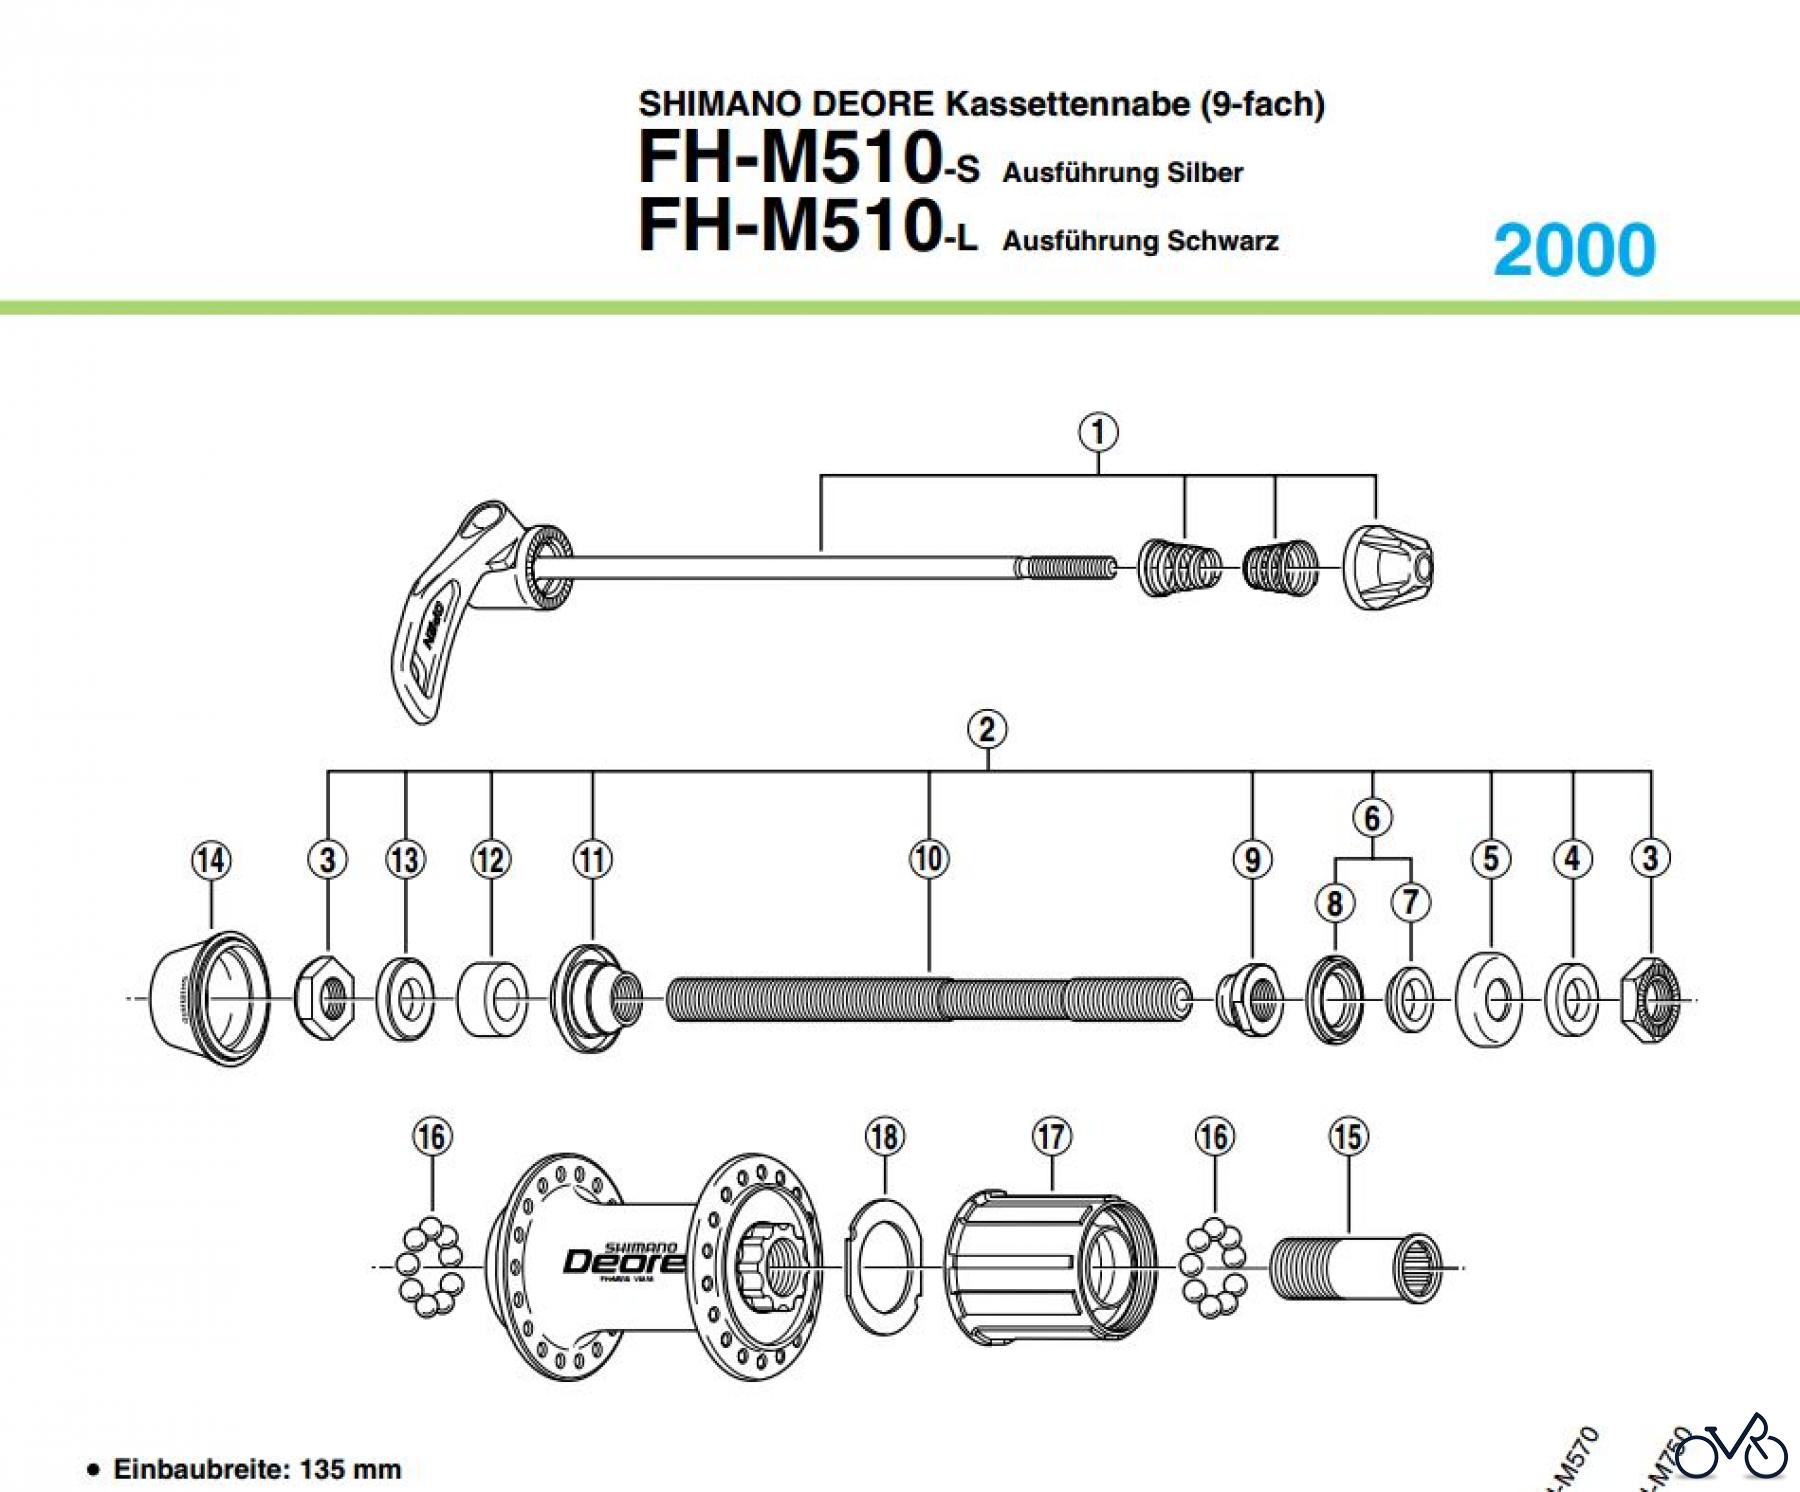  Shimano FH Free Hub - Freilaufnabe FH-M510 -1895 SHIMANO DEORE Kassettennabe (9-fach